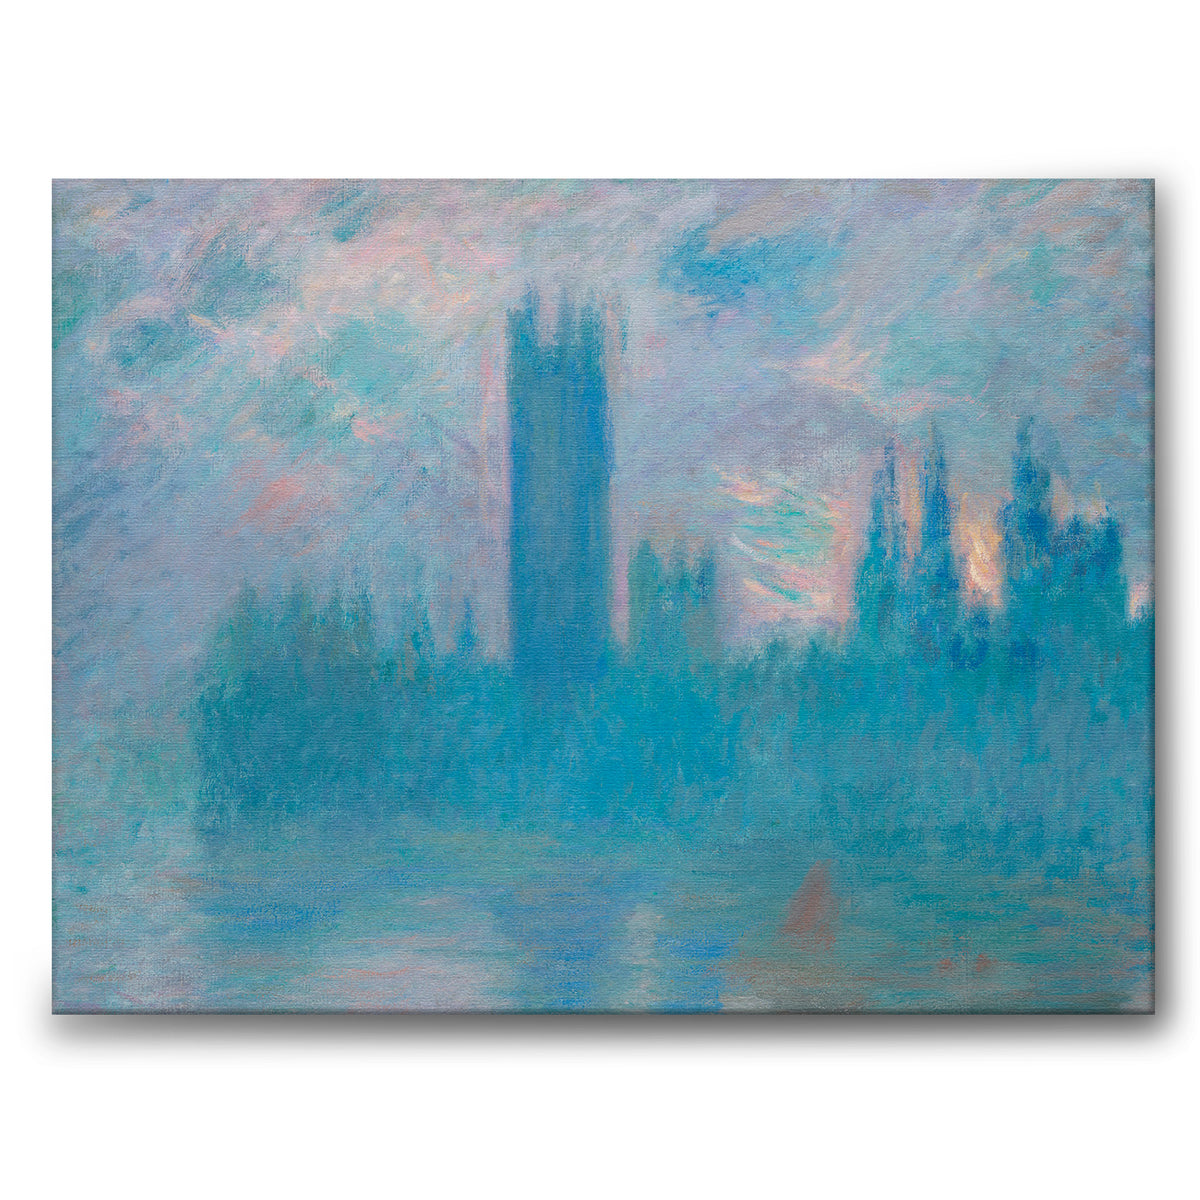 Houses of Parliament, London - Canvas